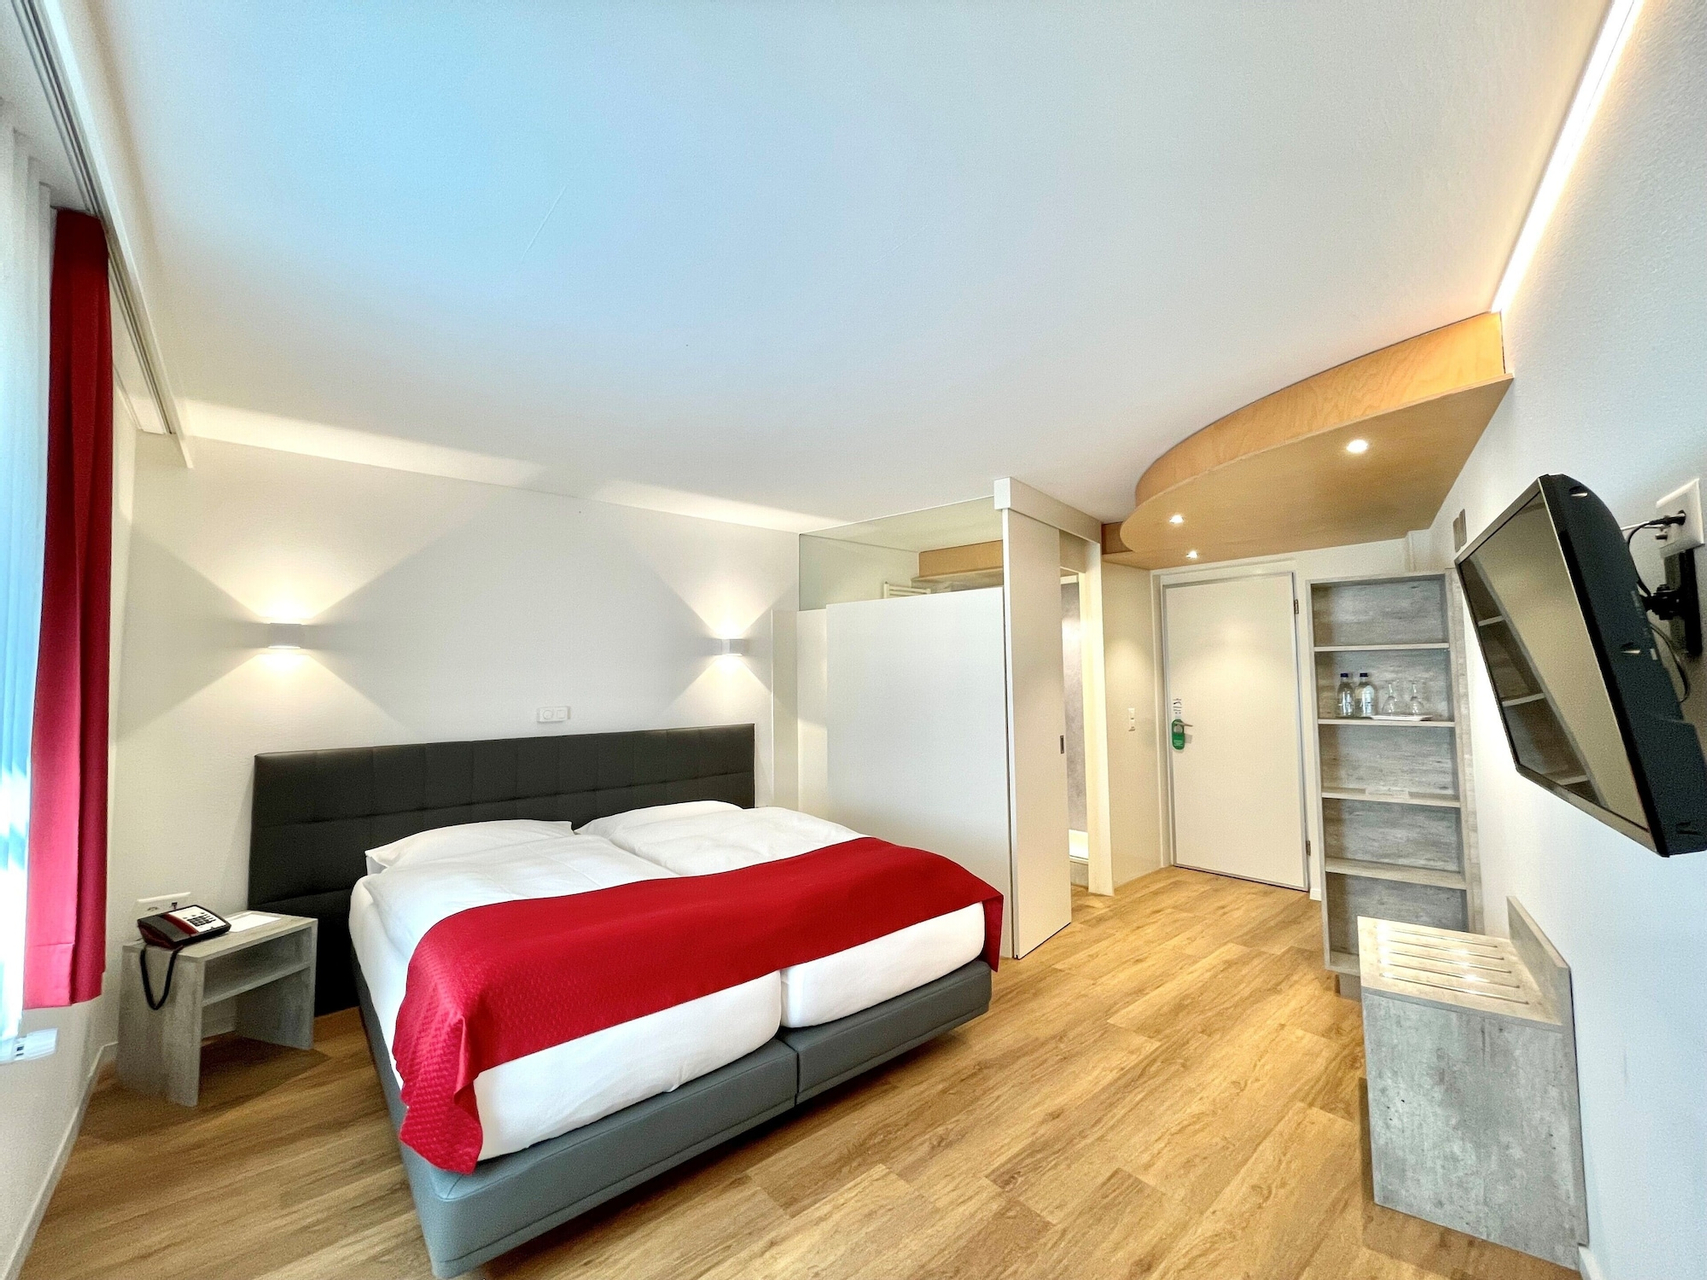 Bedroom 1, Hotel Balsthal, Thal